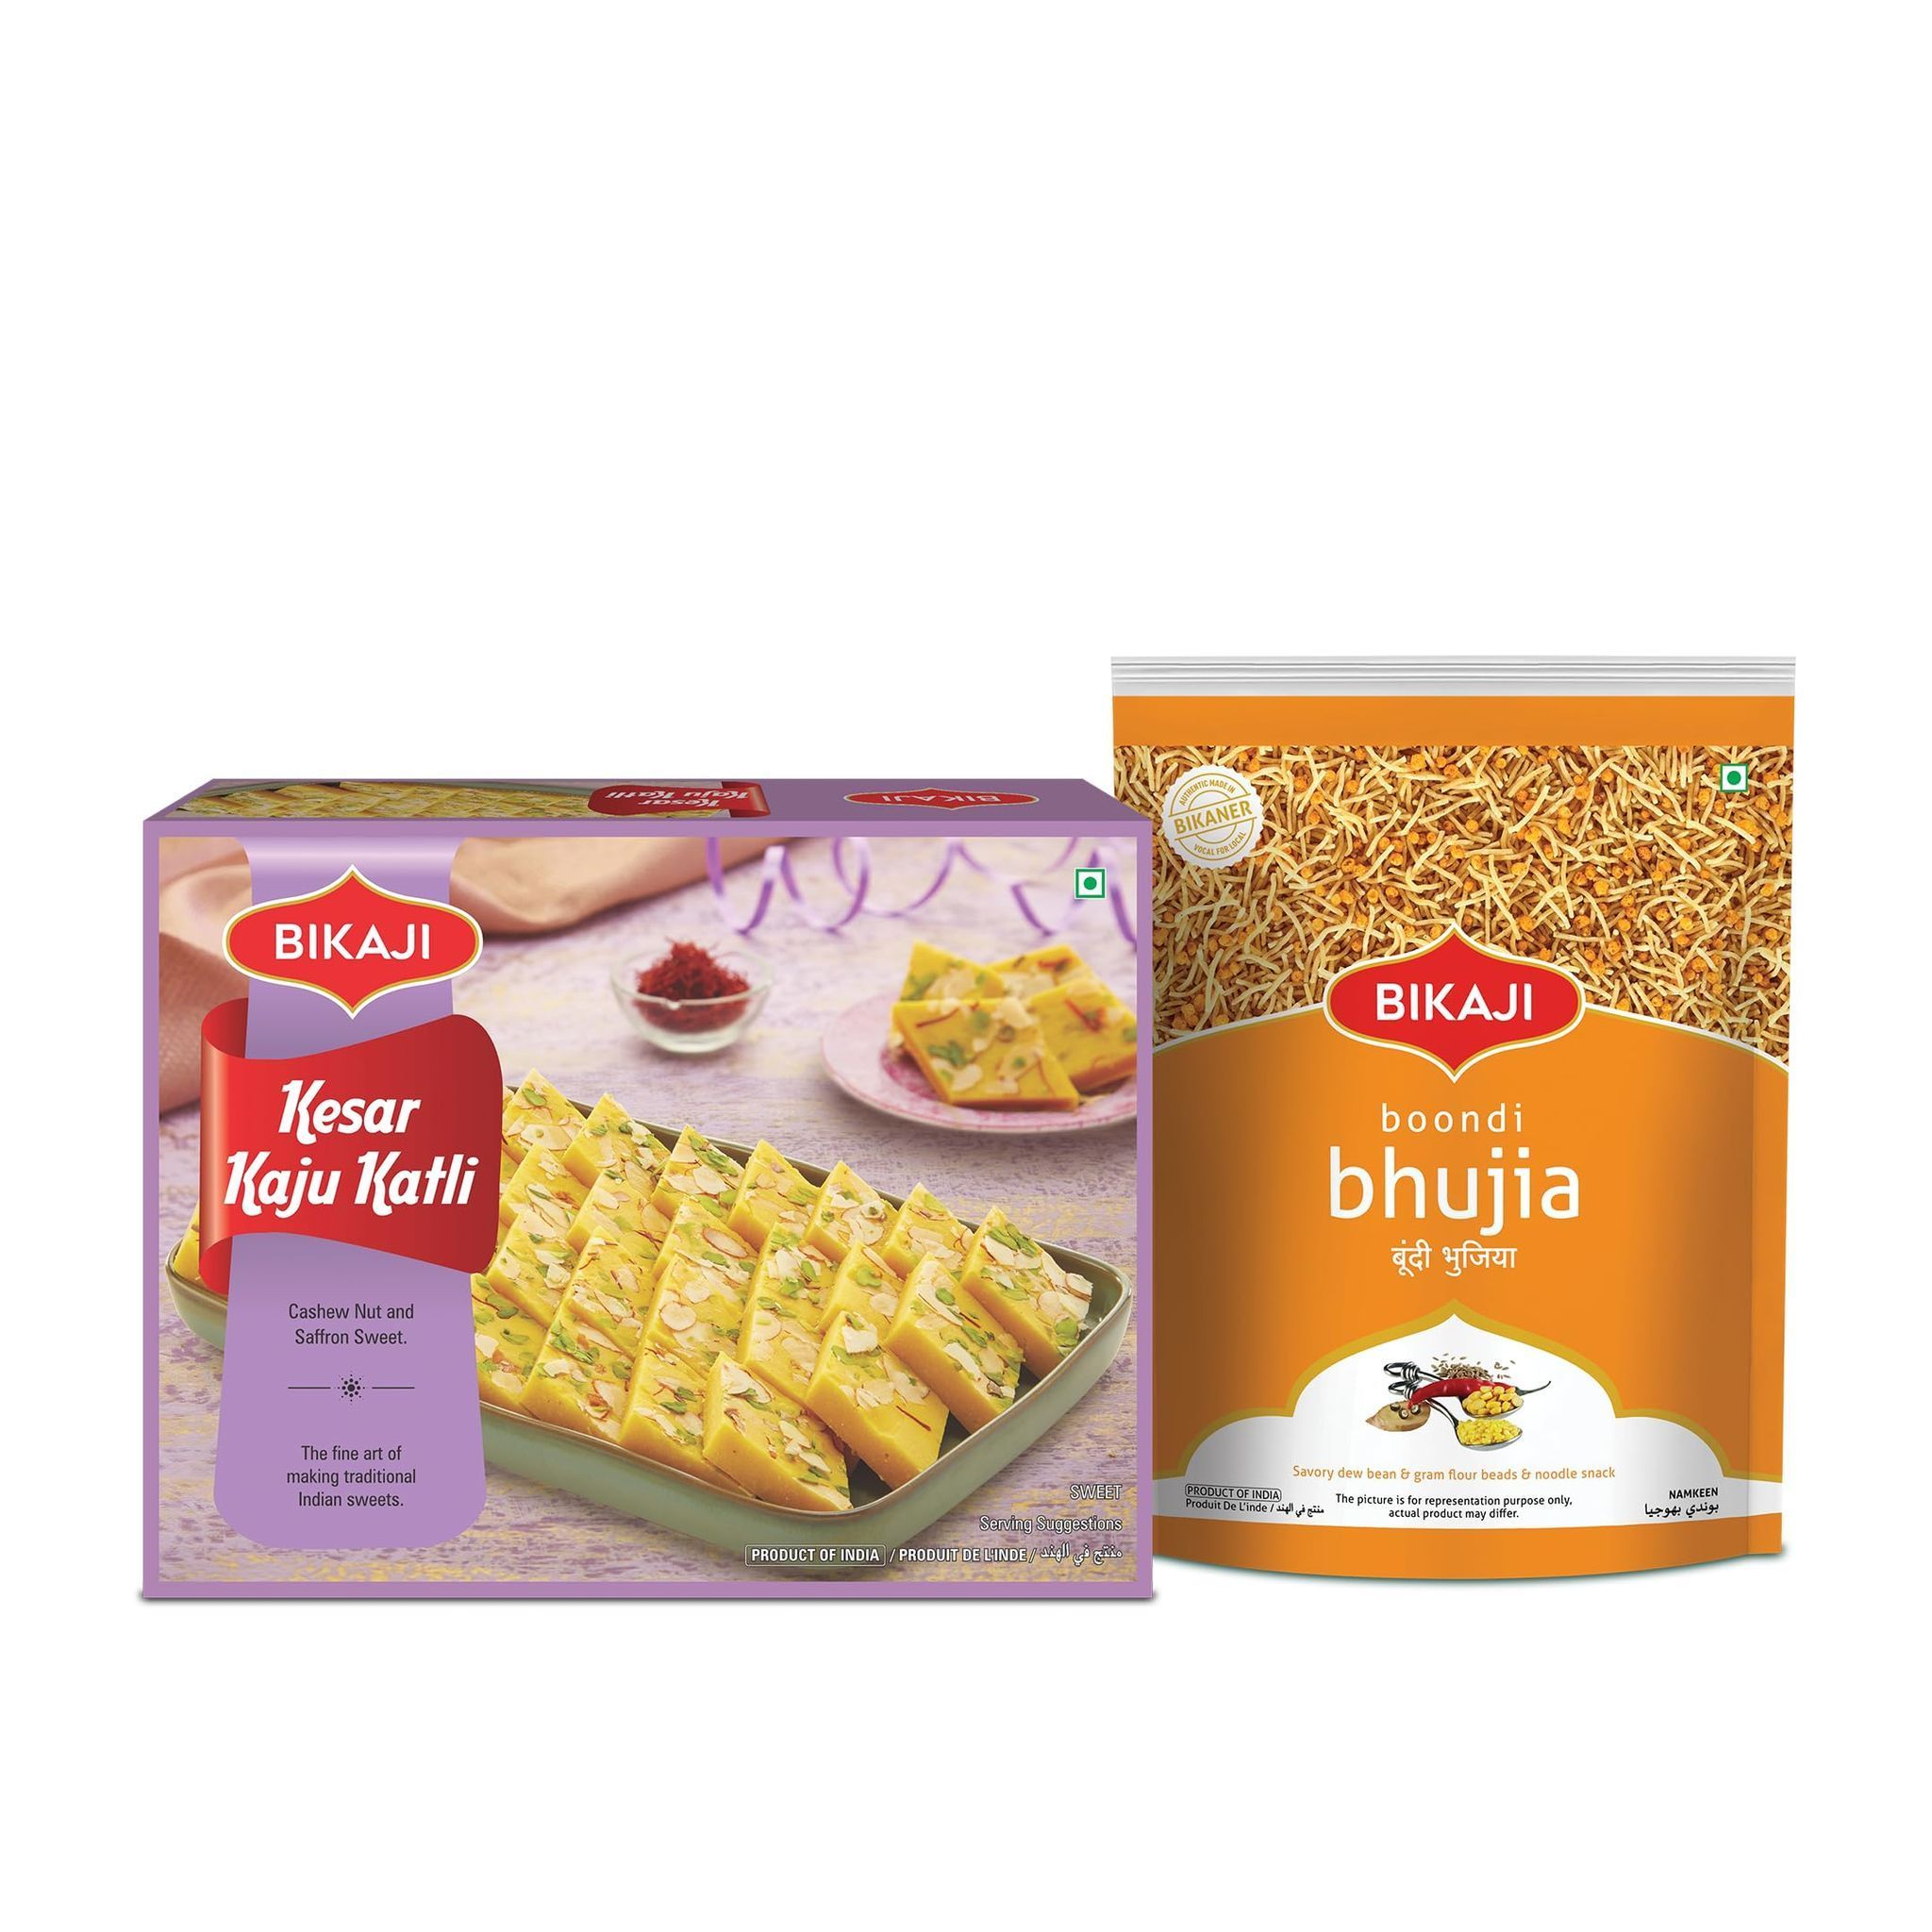 Bikaji Sub-Kuch Navratna Mix 1kg - Authentic Indian Tea Snack | DesiDime